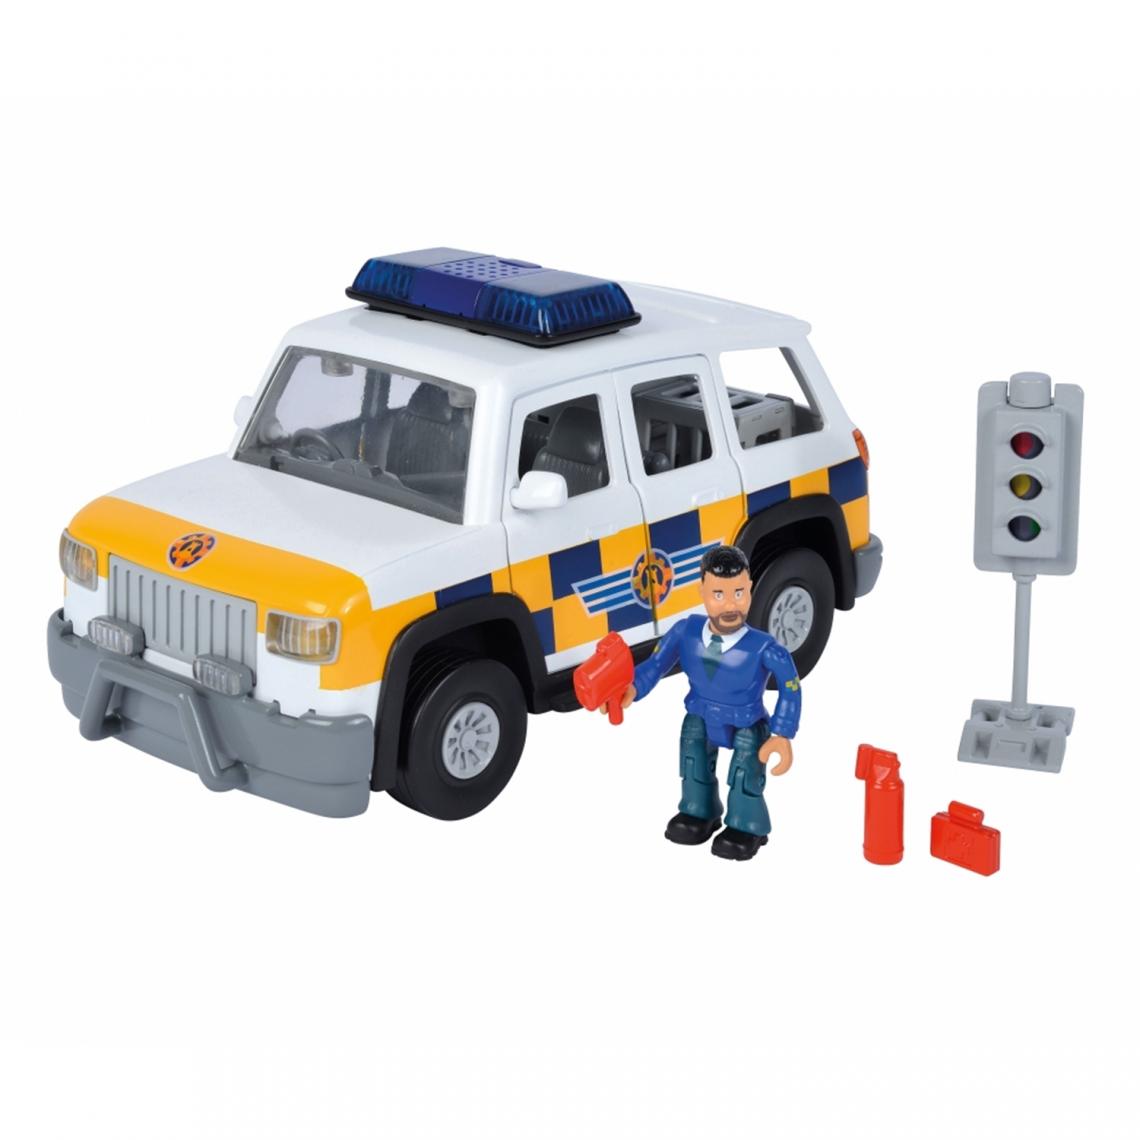 Simba Toys - Simba Toys 109251096 - Sam le pompier Voiture de Police 4x4 avec figurine - Voitures